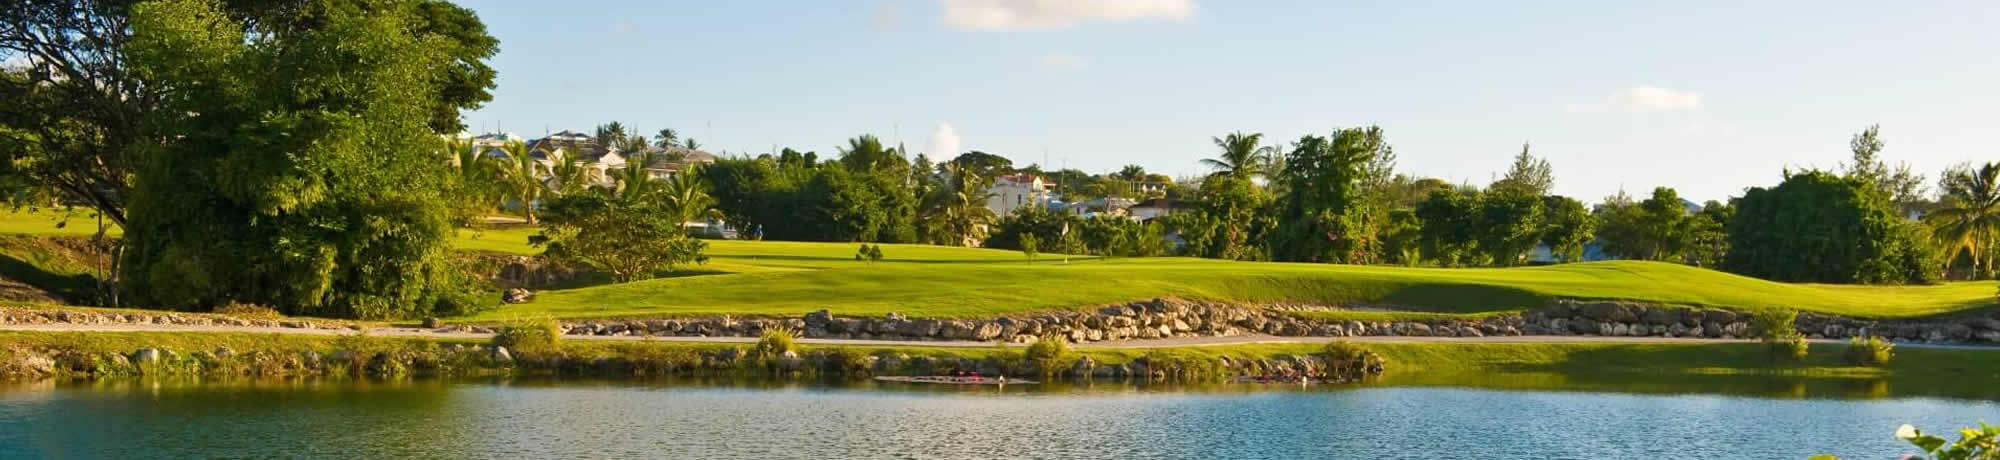 Barbados Golf Association